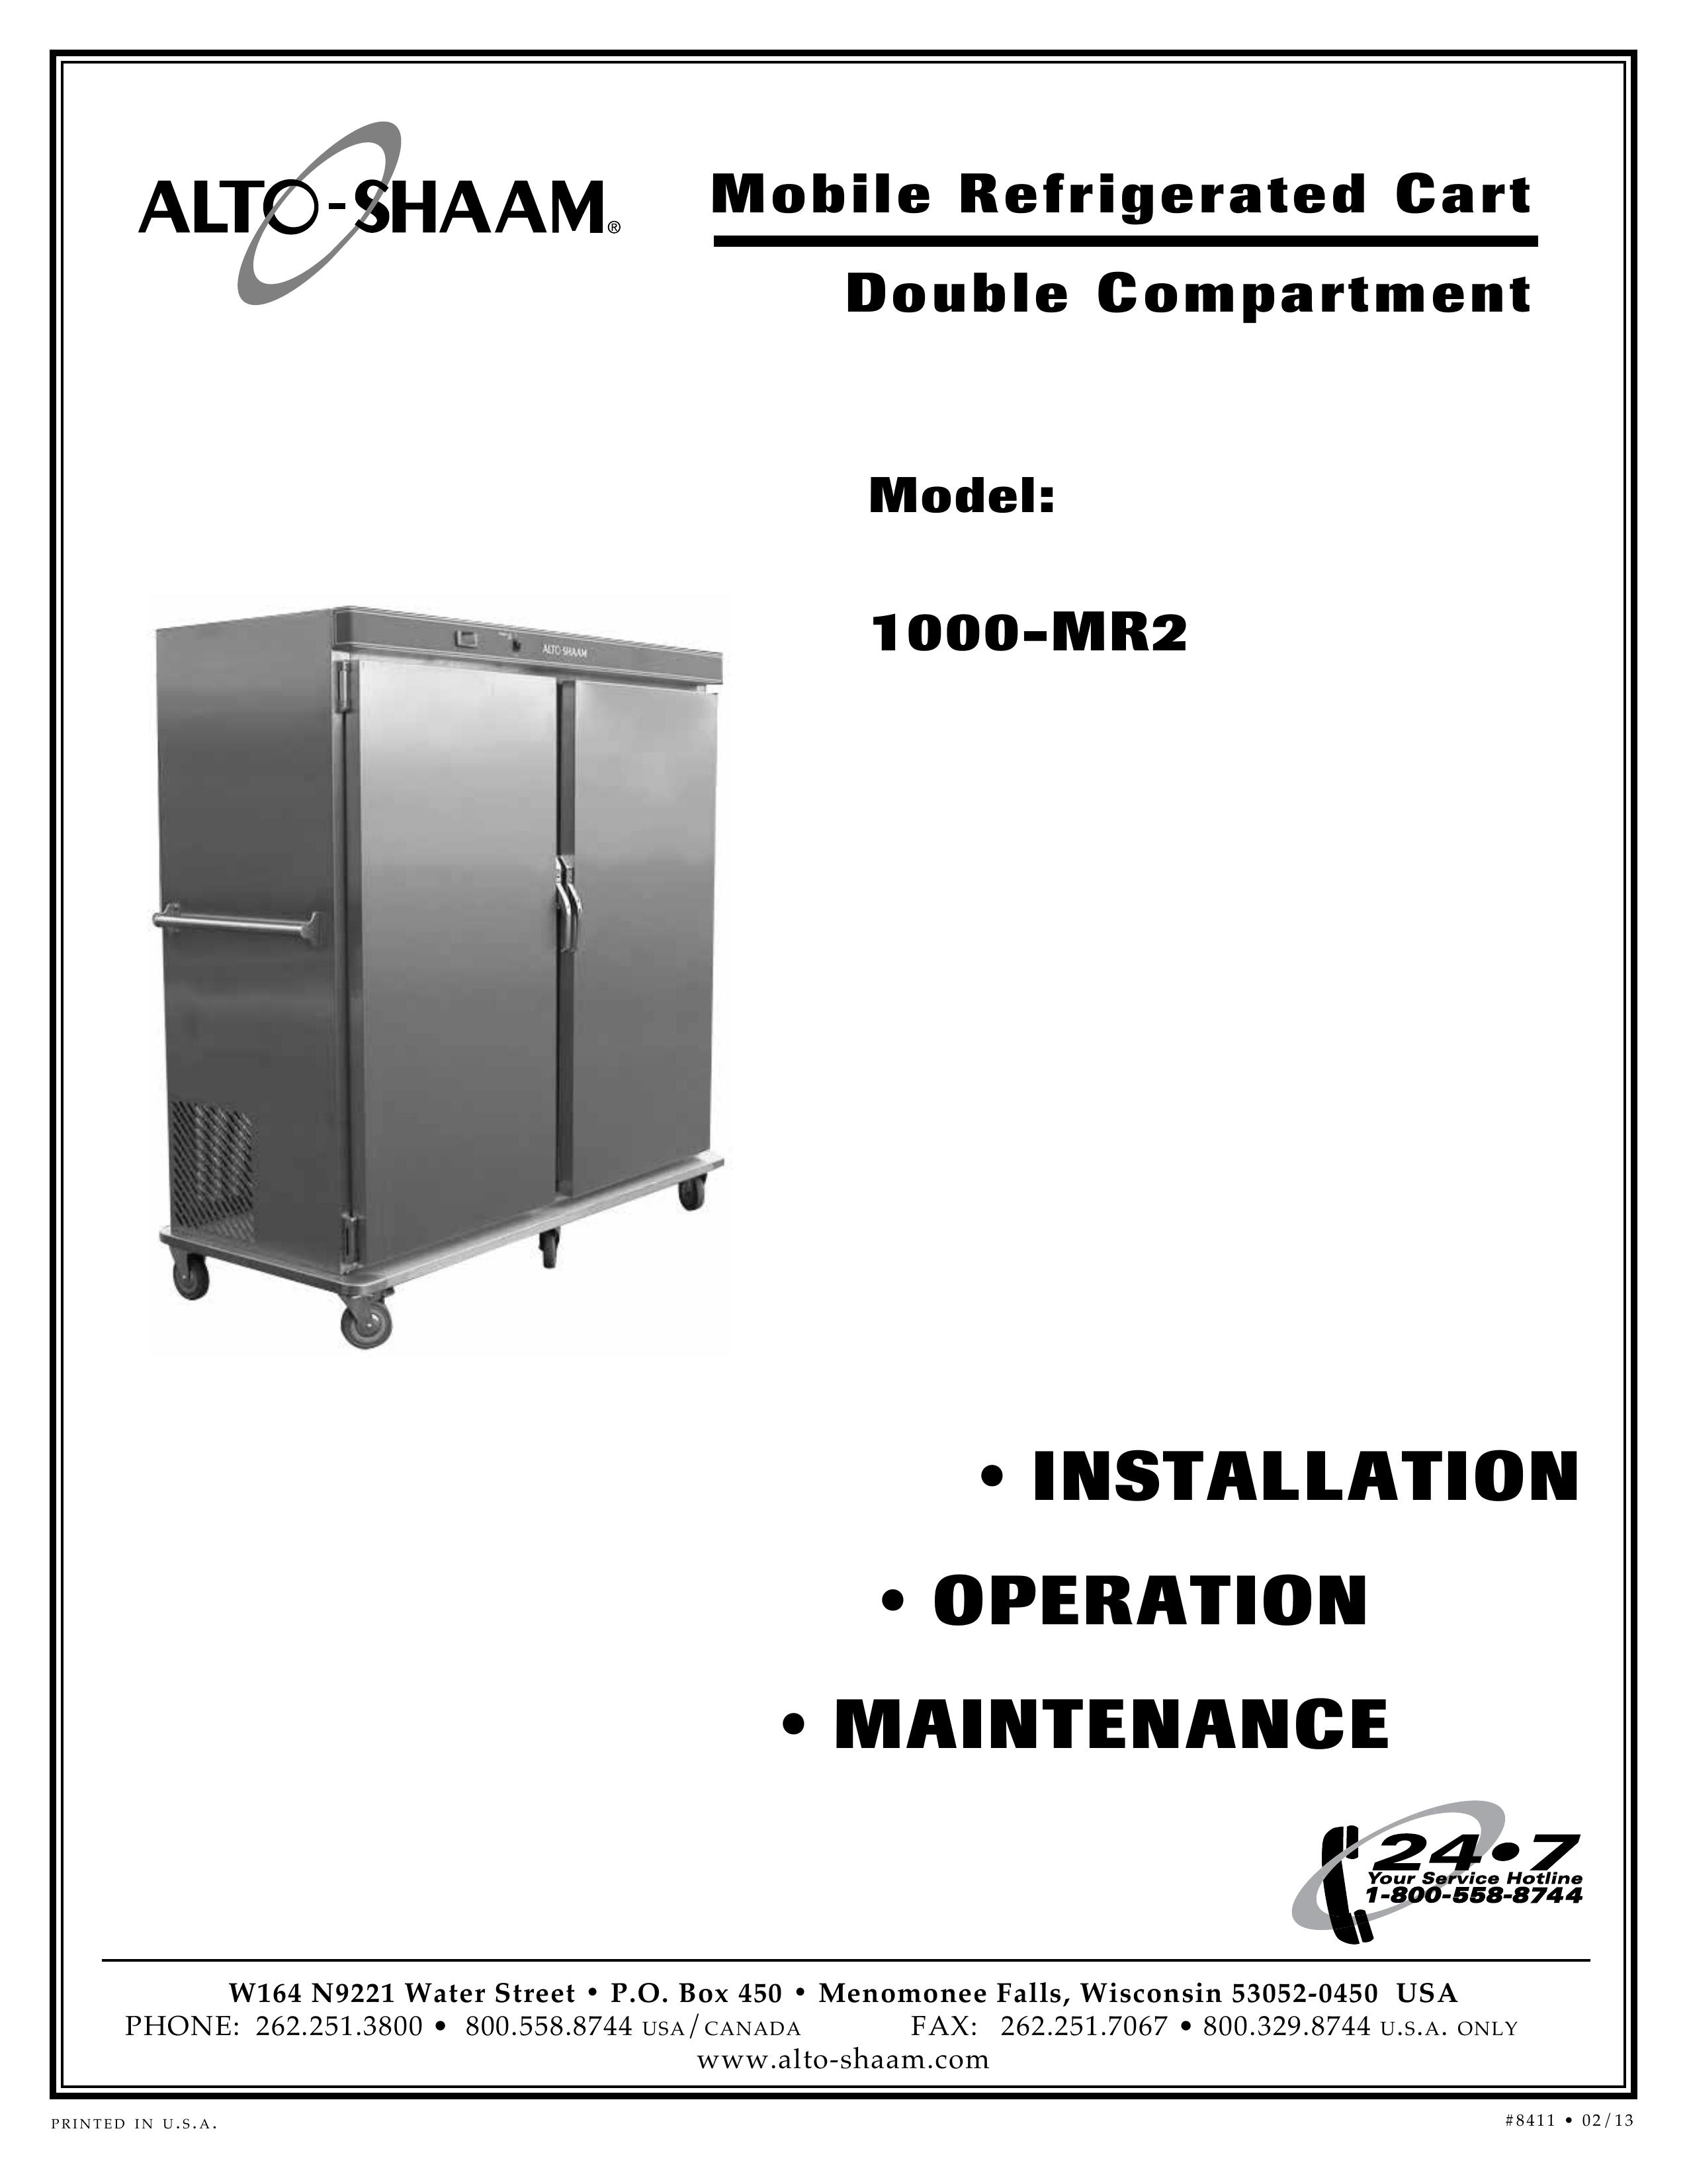 Alto-Shaam Mobile Refrigerated Cart Refrigerator User Manual